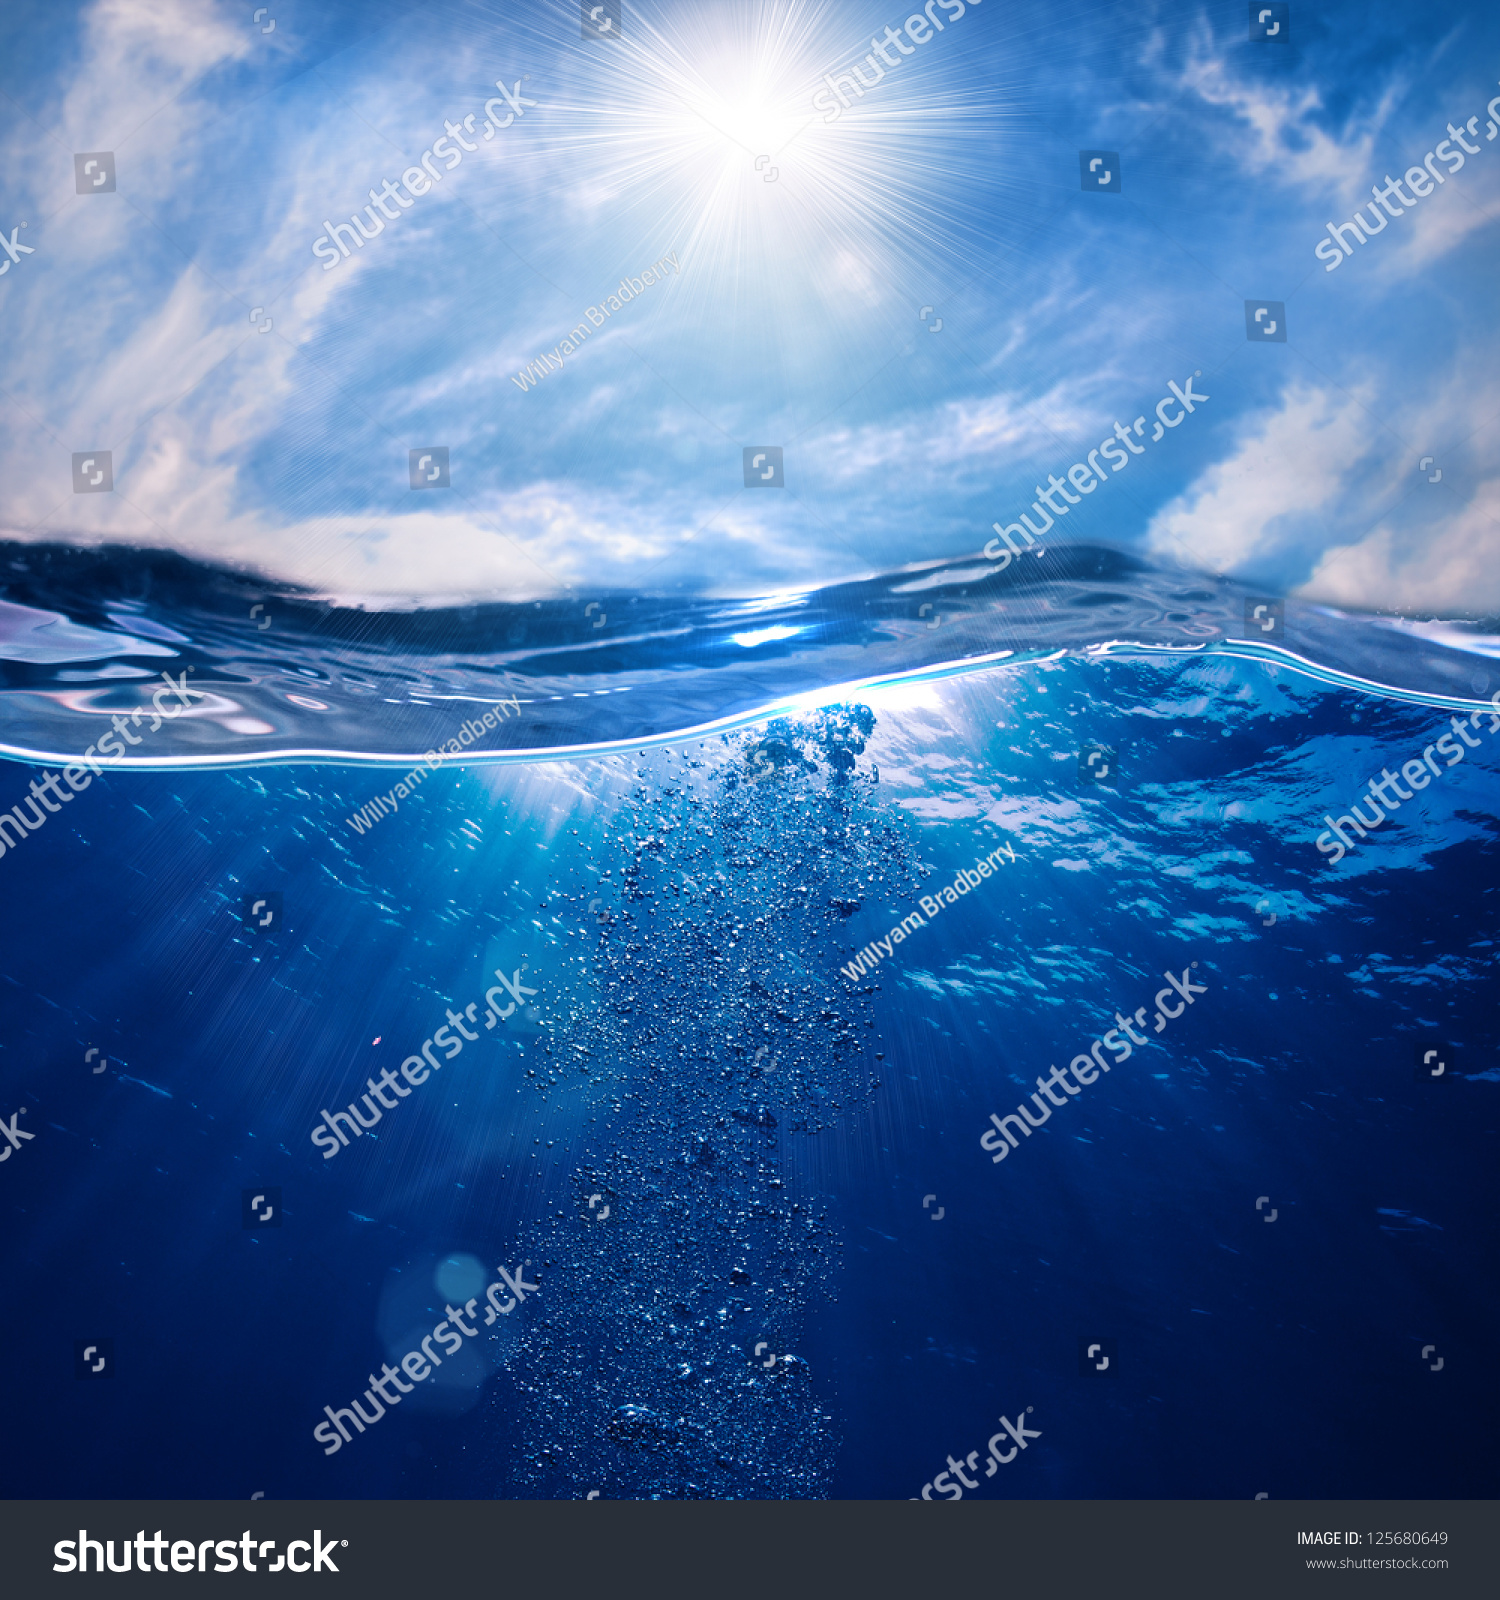 Design Template Underwater Part Sunset Skylight Stock Photo 125680649 ...